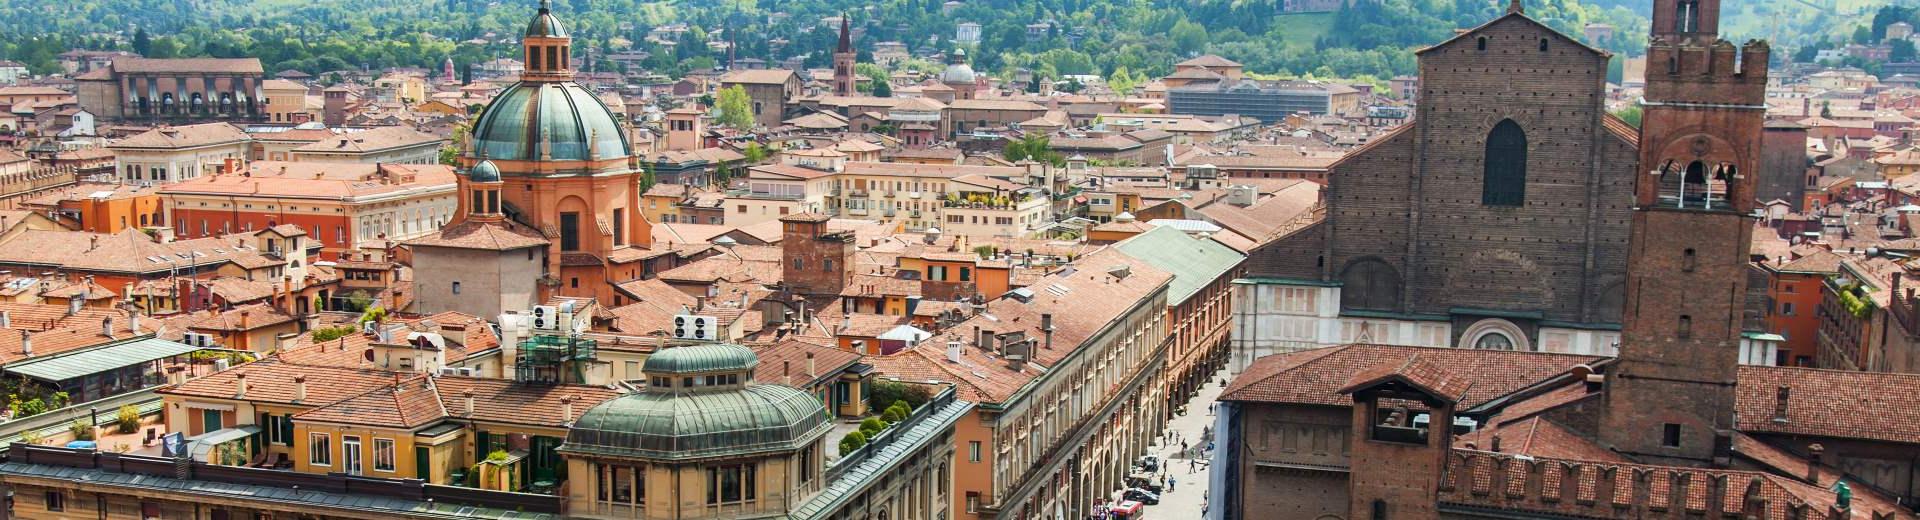 Noclegi i apartamenty wakacyjne w Bolonii - Casamundo